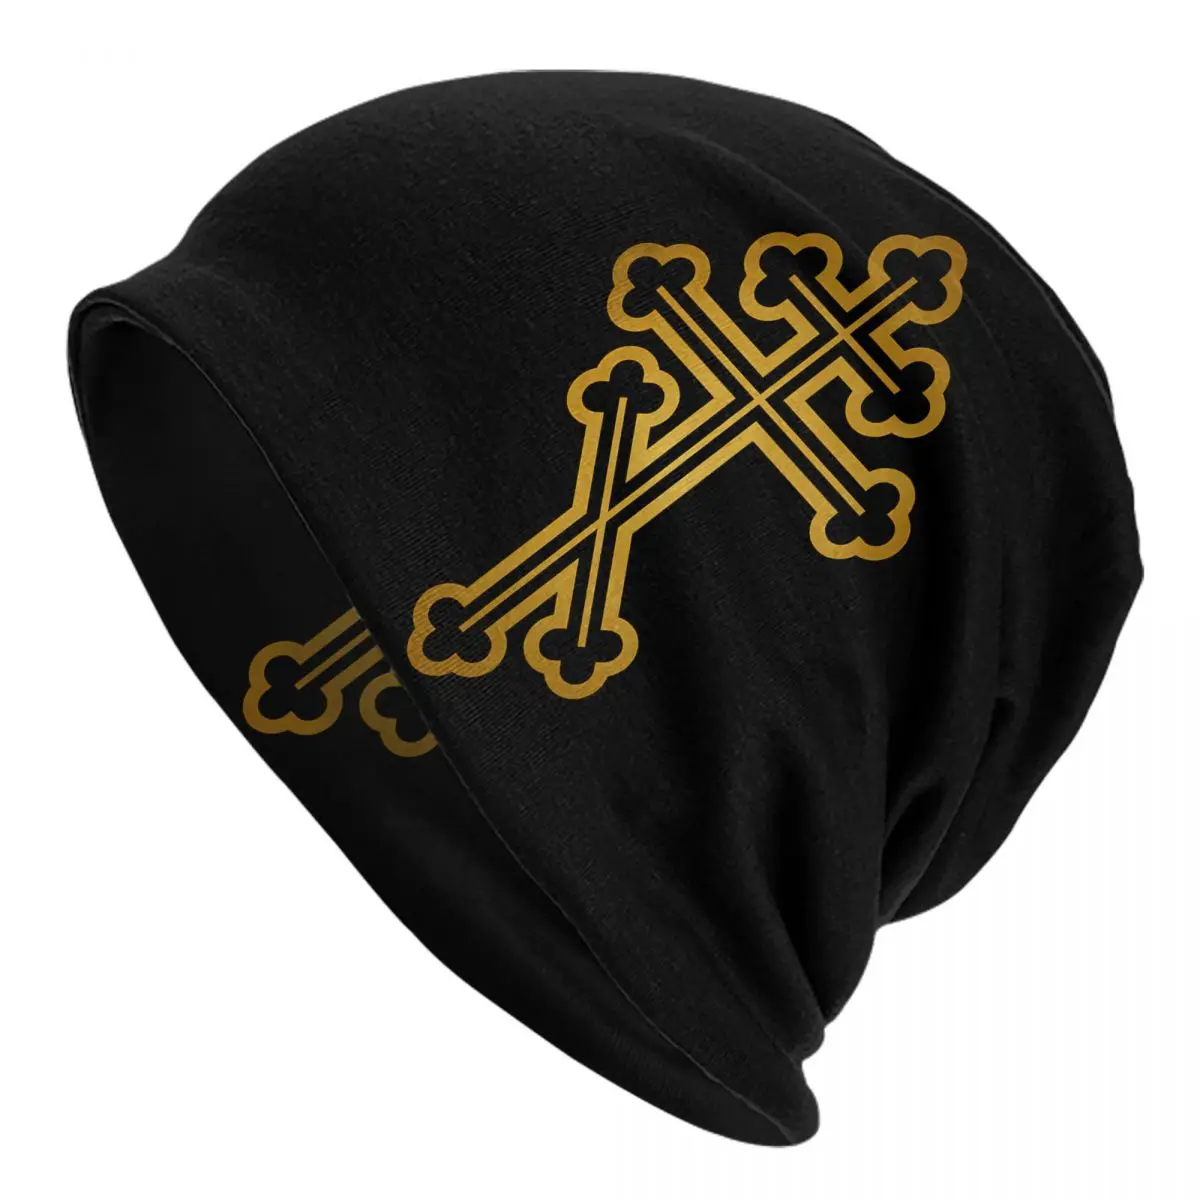 Orthodox Cross Adult Men's Women's Knit Hat Keep warm winter knitted hat